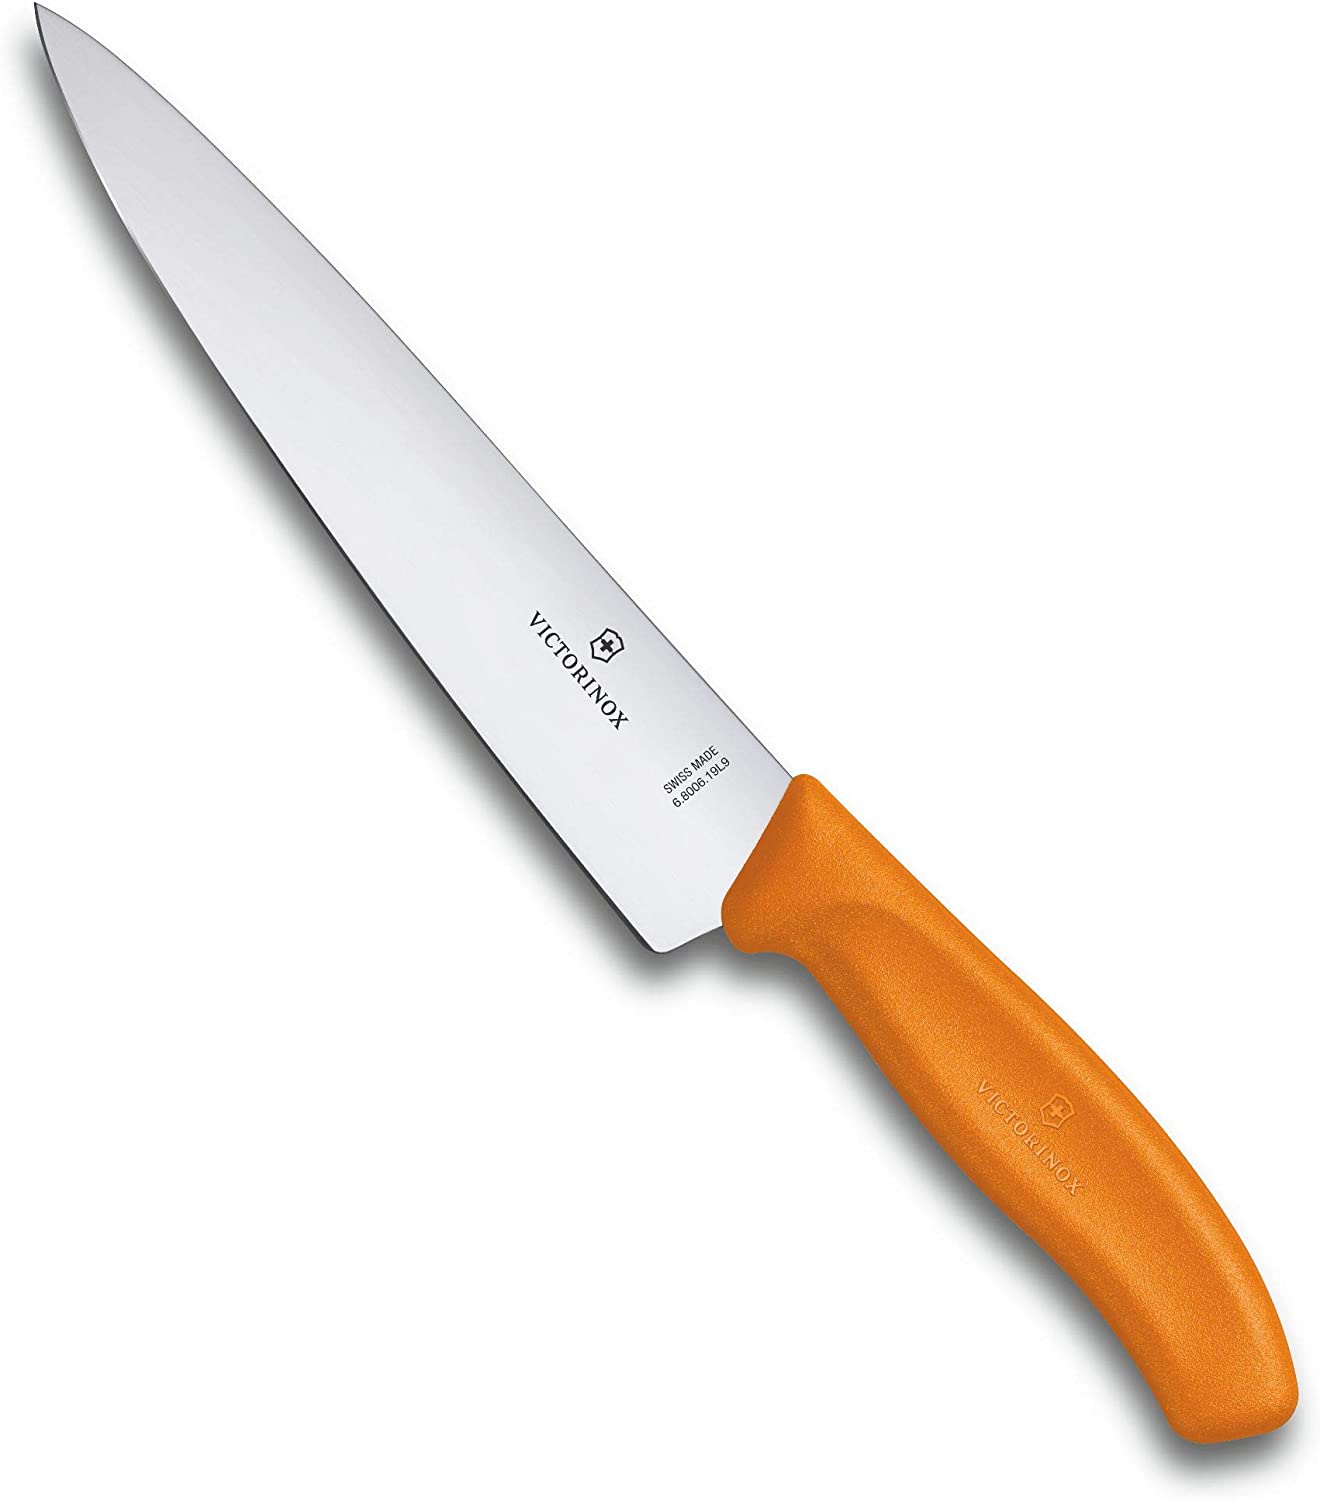 Victorinox 19 cm Carving Knife Blister Pack, Orange